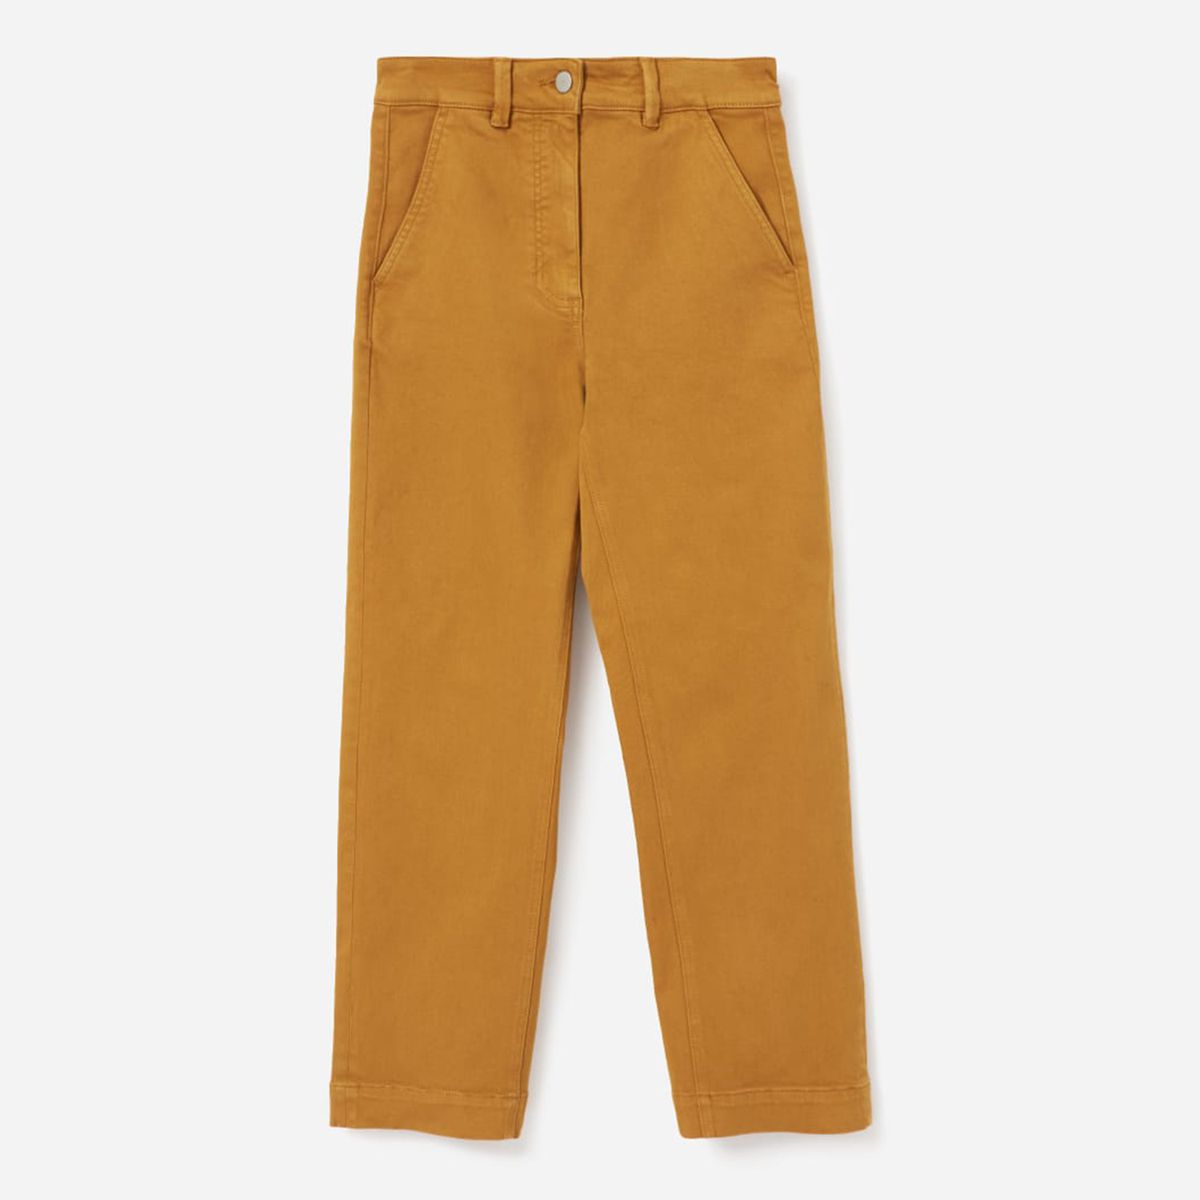 Everlane Straight Leg Crop Golden Brown Pants